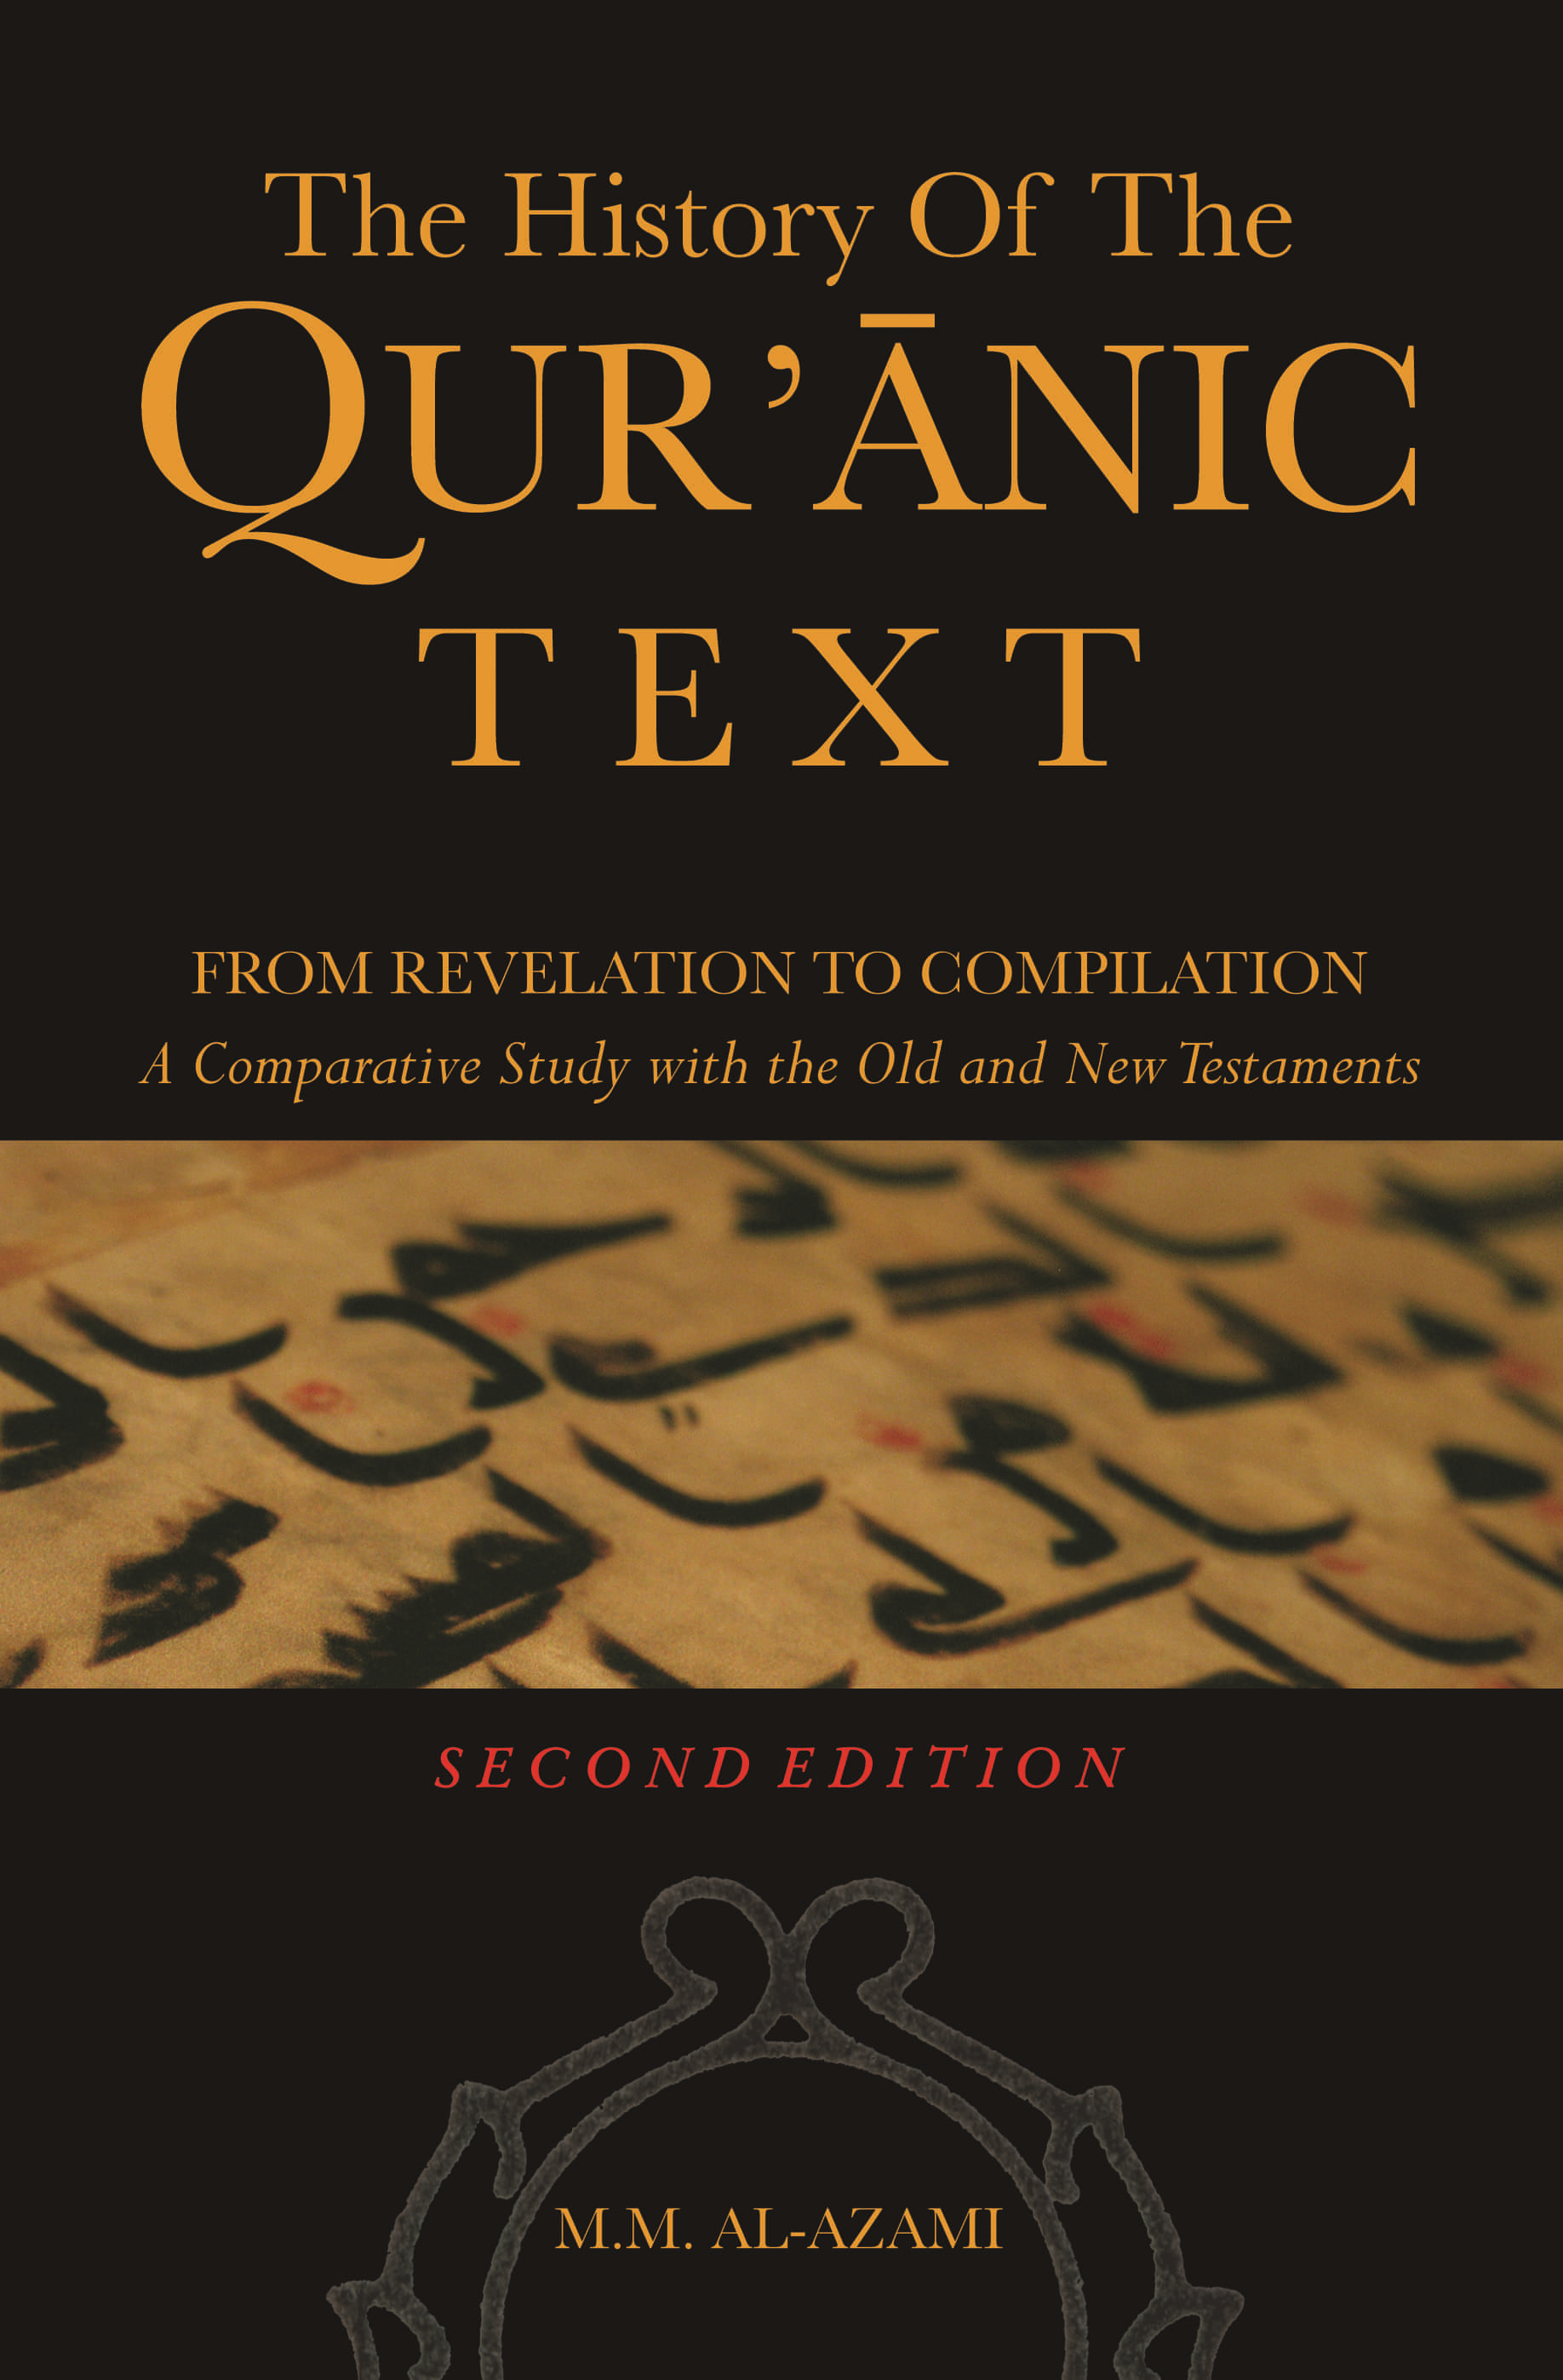 The History of the Quranic Text : The Revelation - Muhammad Mustafa Al-Azami - 9789675062636 - Islamic Book Trust